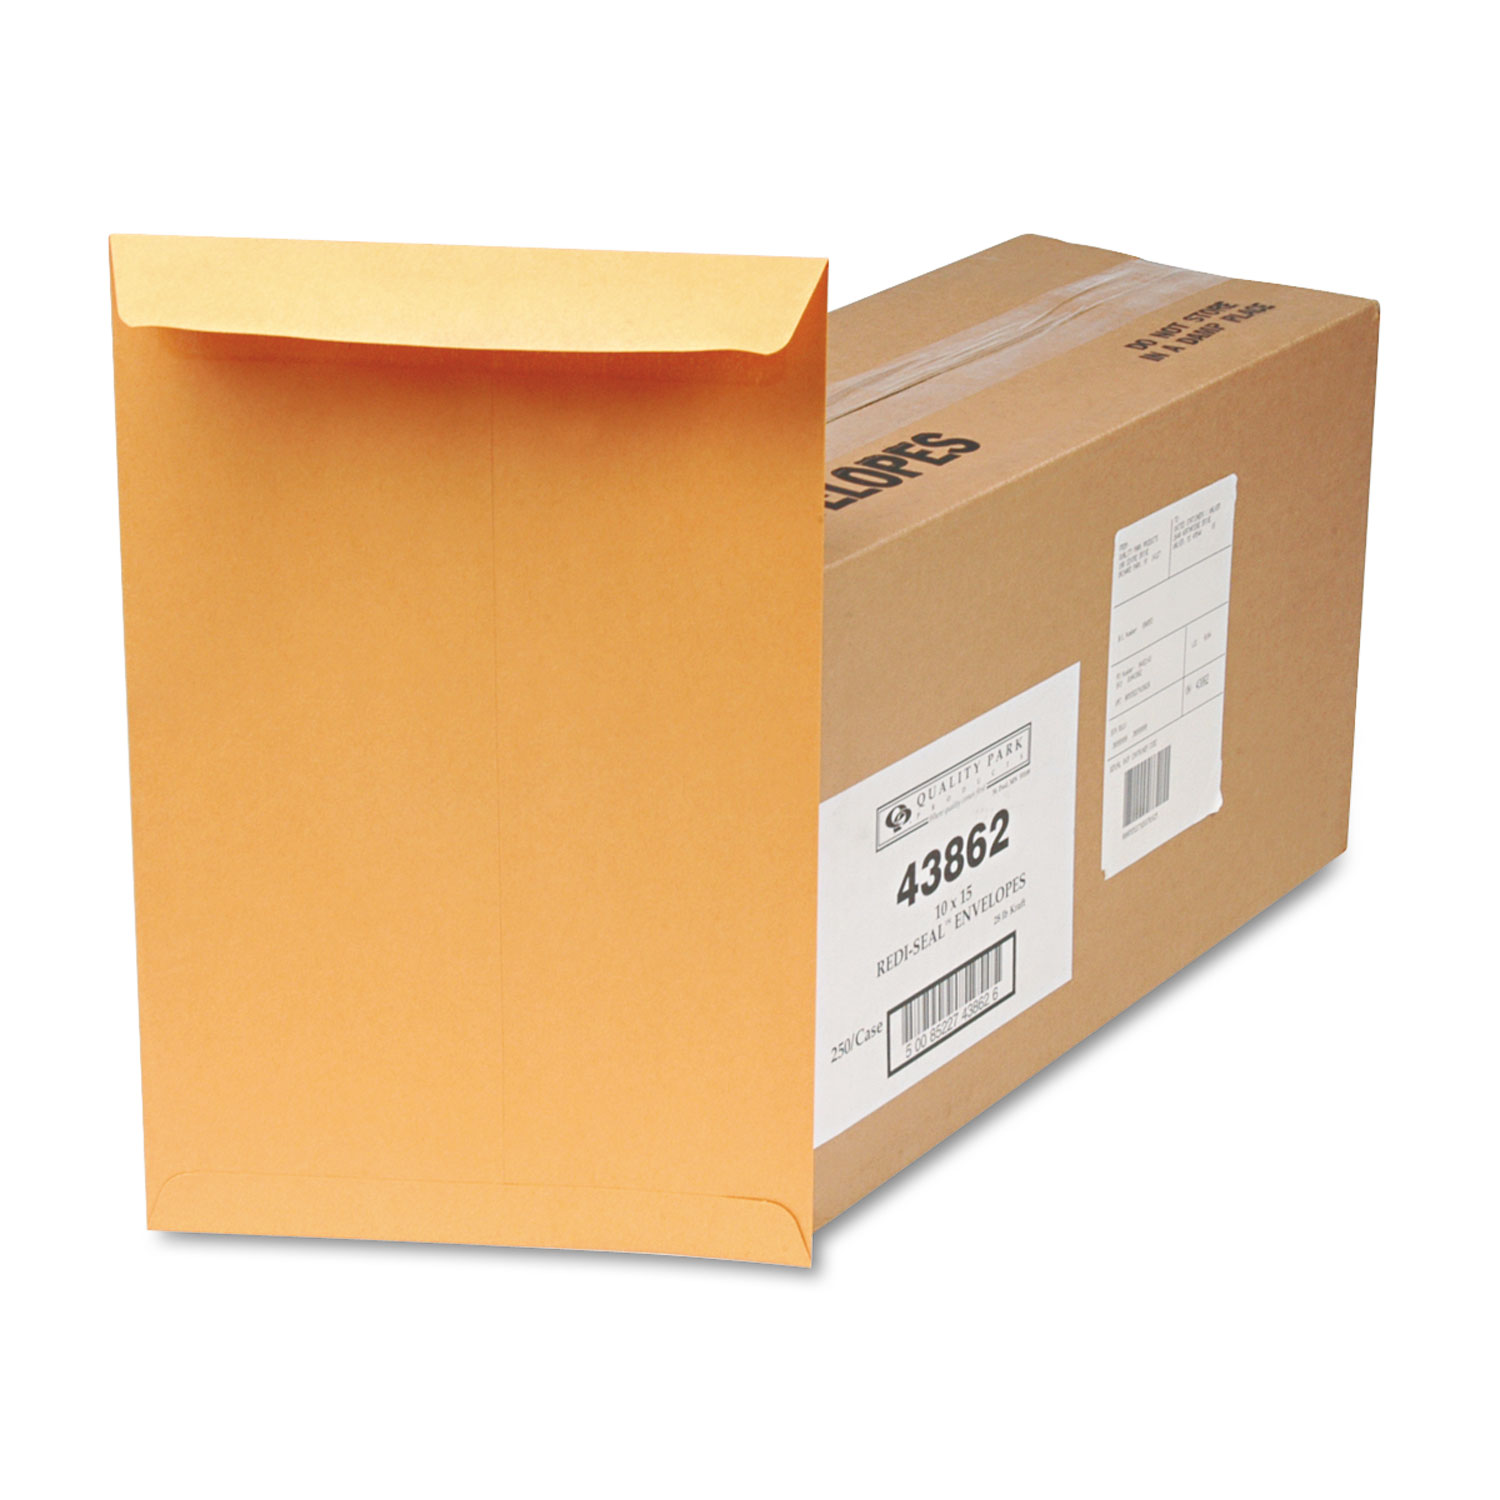  Quality Park QUA43862 Redi-Seal Catalog Envelope, #15, Cheese Blade Flap, Redi-Seal Closure, 10 x 15, Brown Kraft, 250/Box (QUA43862) 